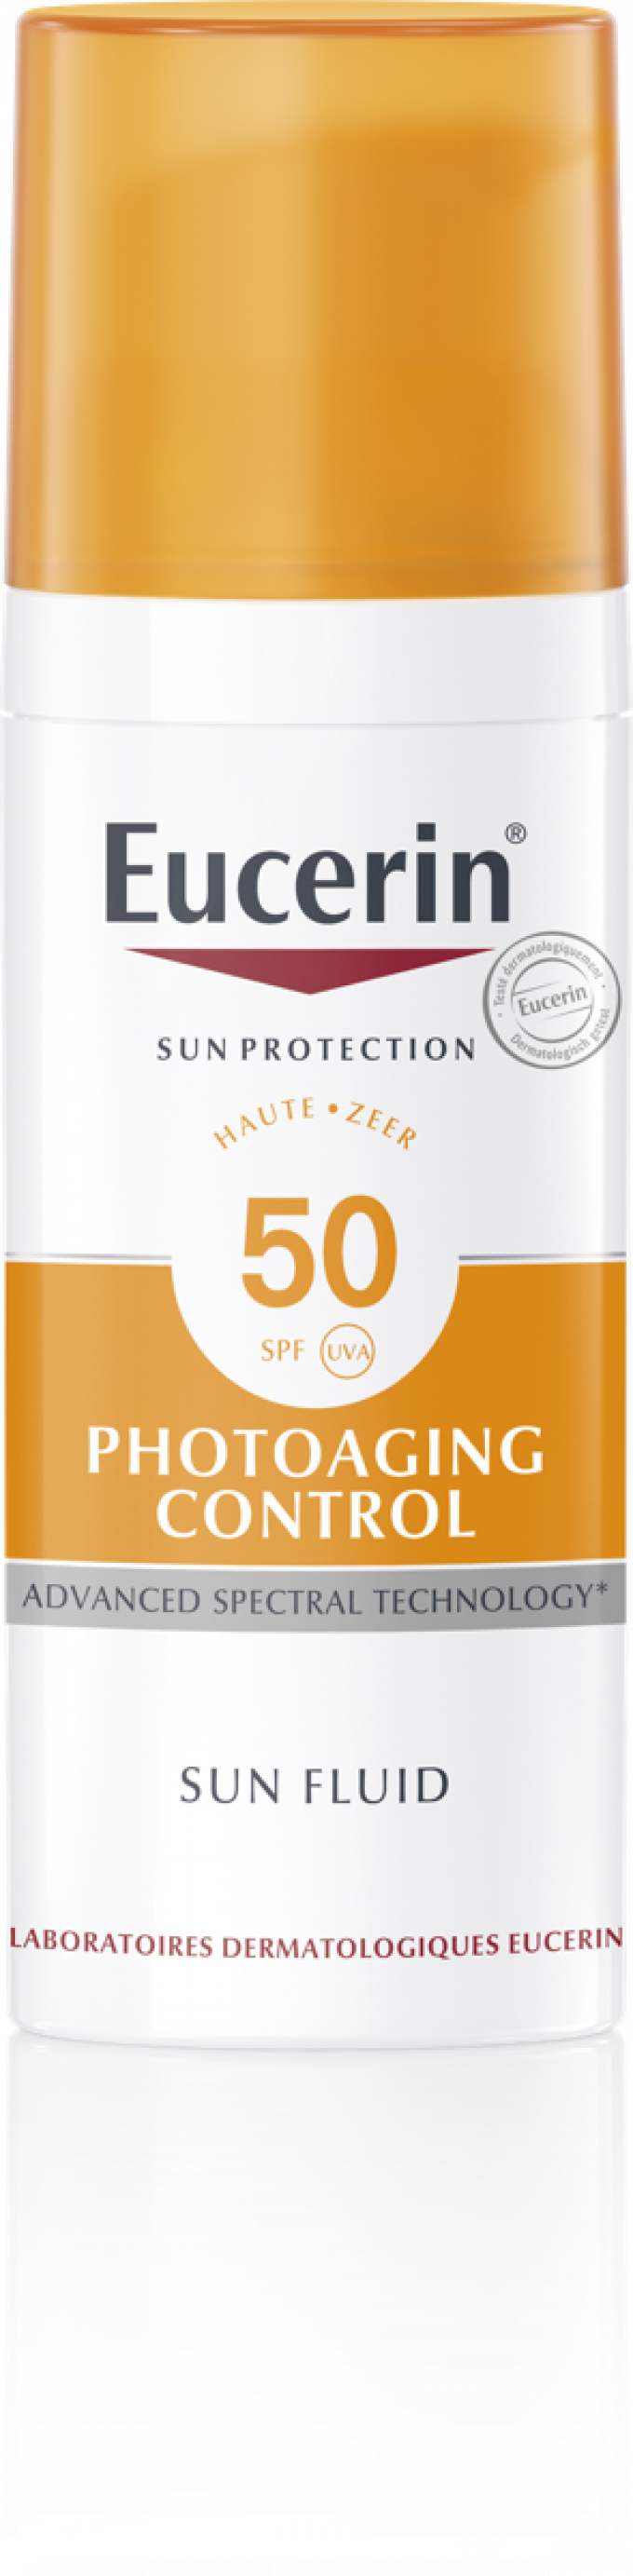 Sun Photoaging Control SPF 50